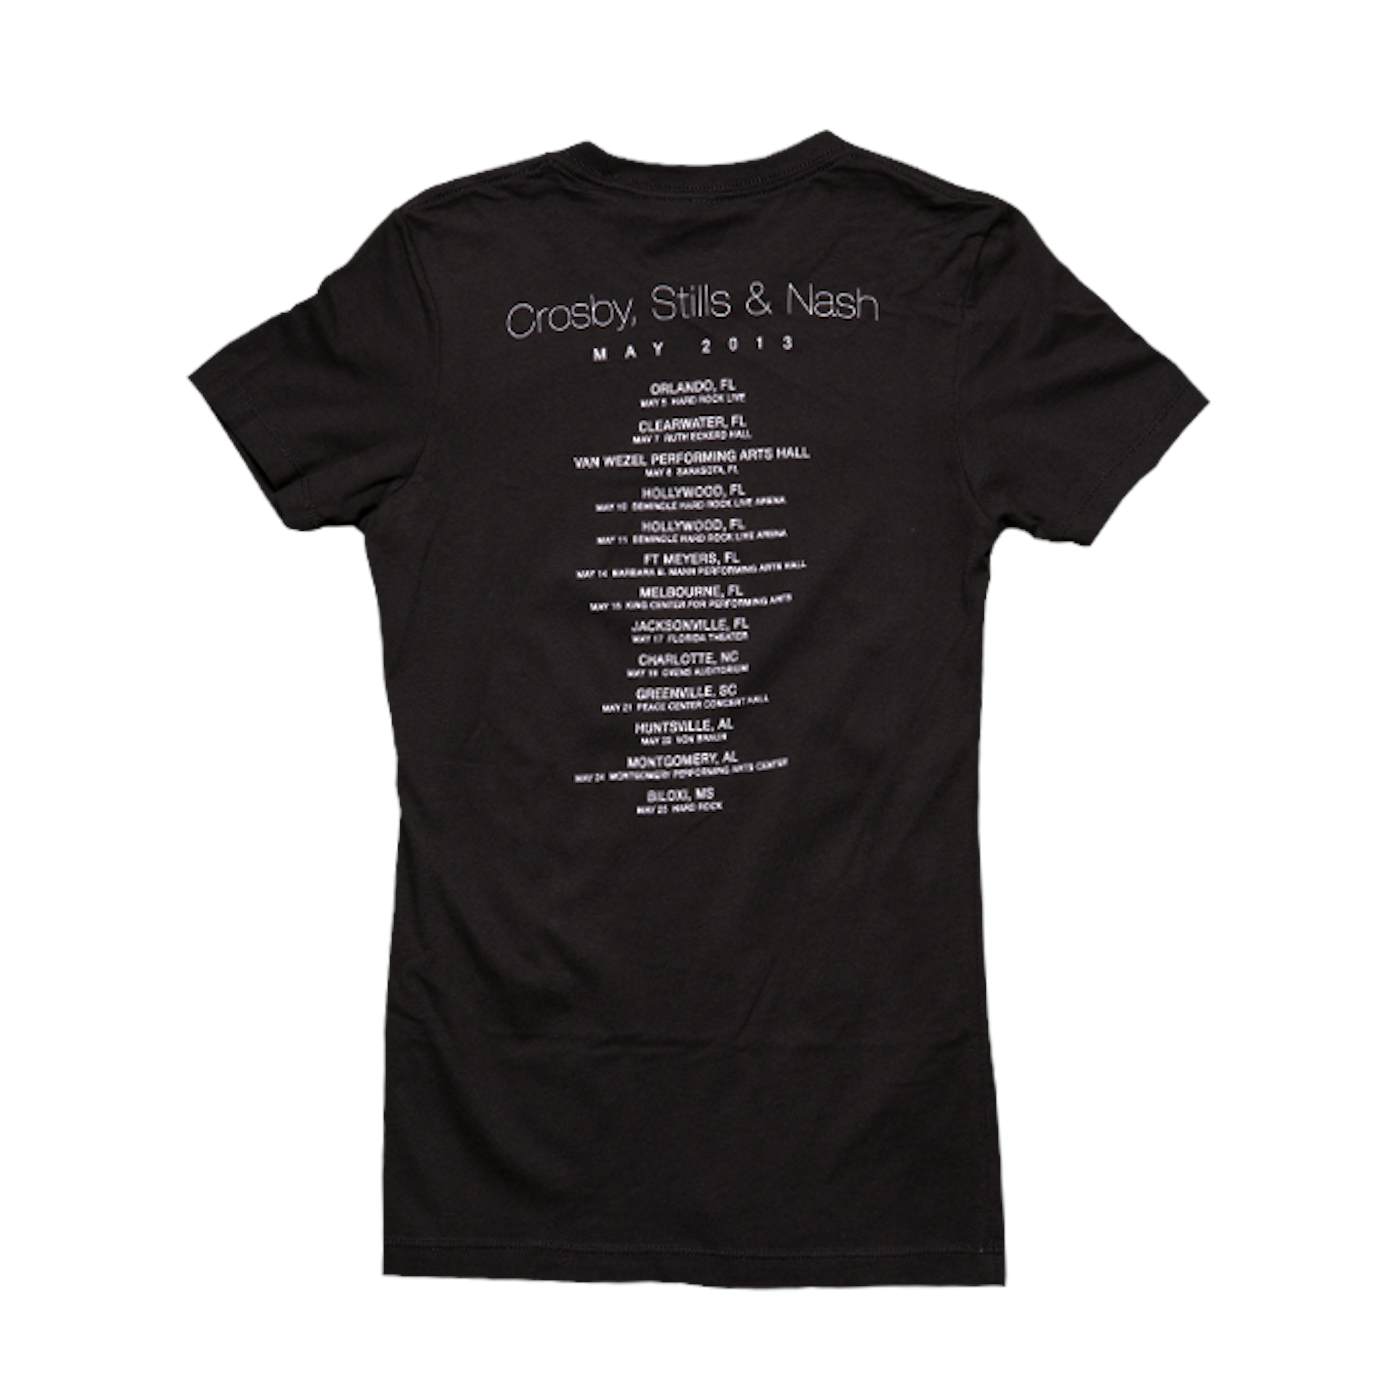 Crosby, Stills & Nash CSN "2013 Tour Photo/Itinerary" Womens T-Shirt